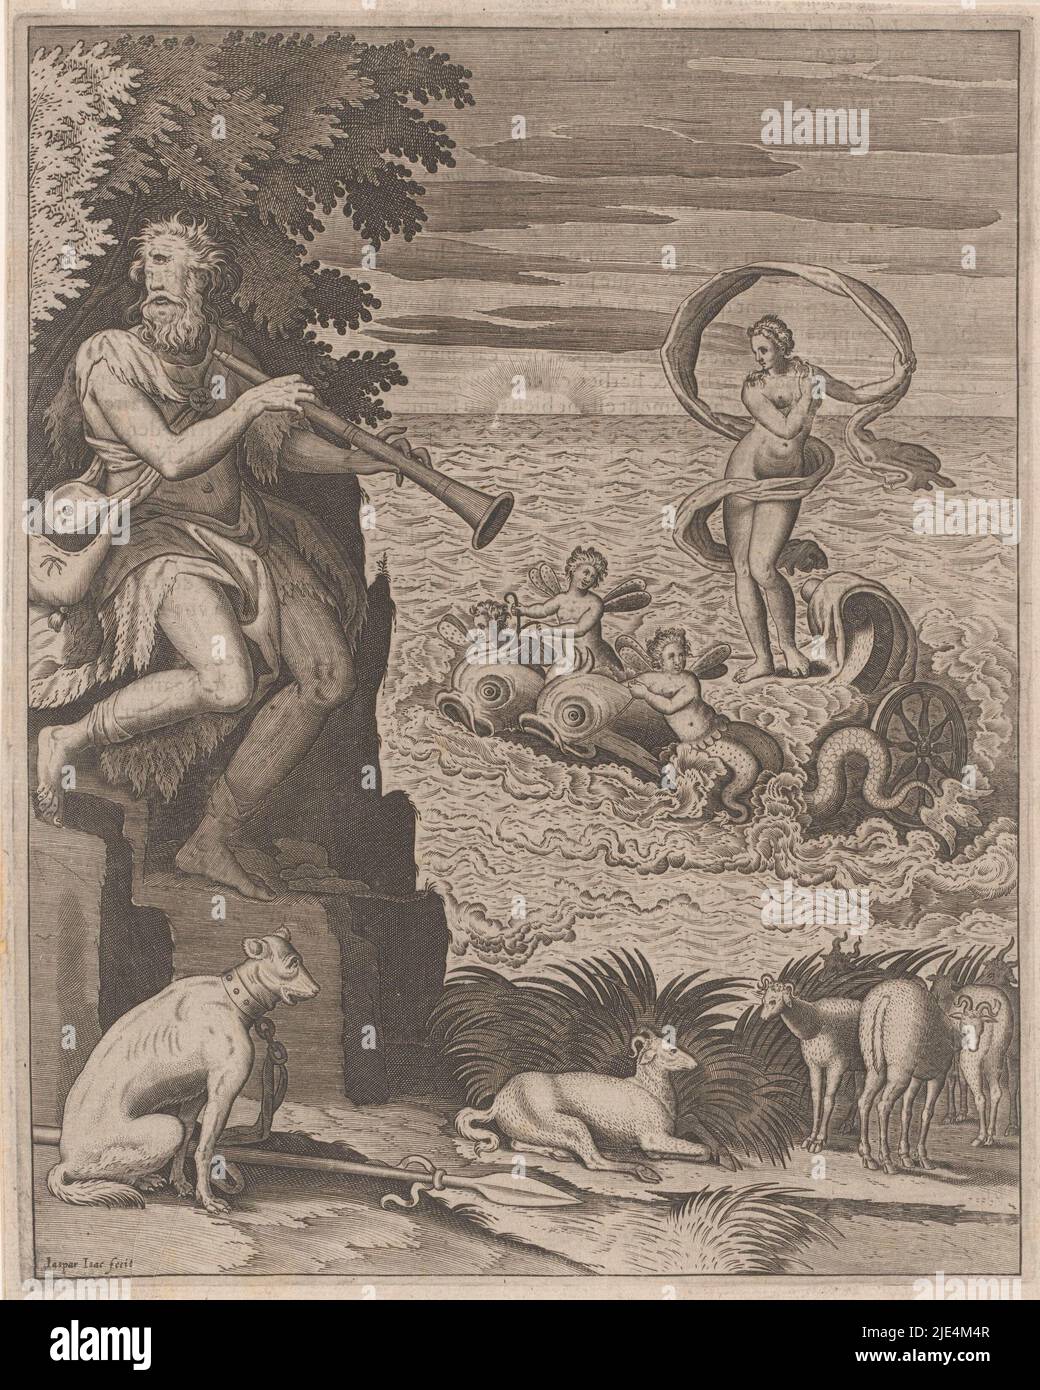 Triumph of Venus with Polyphemus on the shore, Jaspar de Isaac, 1564 - 1654, print maker: Jaspar de Isaac, (mentioned on object), France, 1564 - 1654, paper, engraving, h 239 mm × w 192 mm Stock Photo